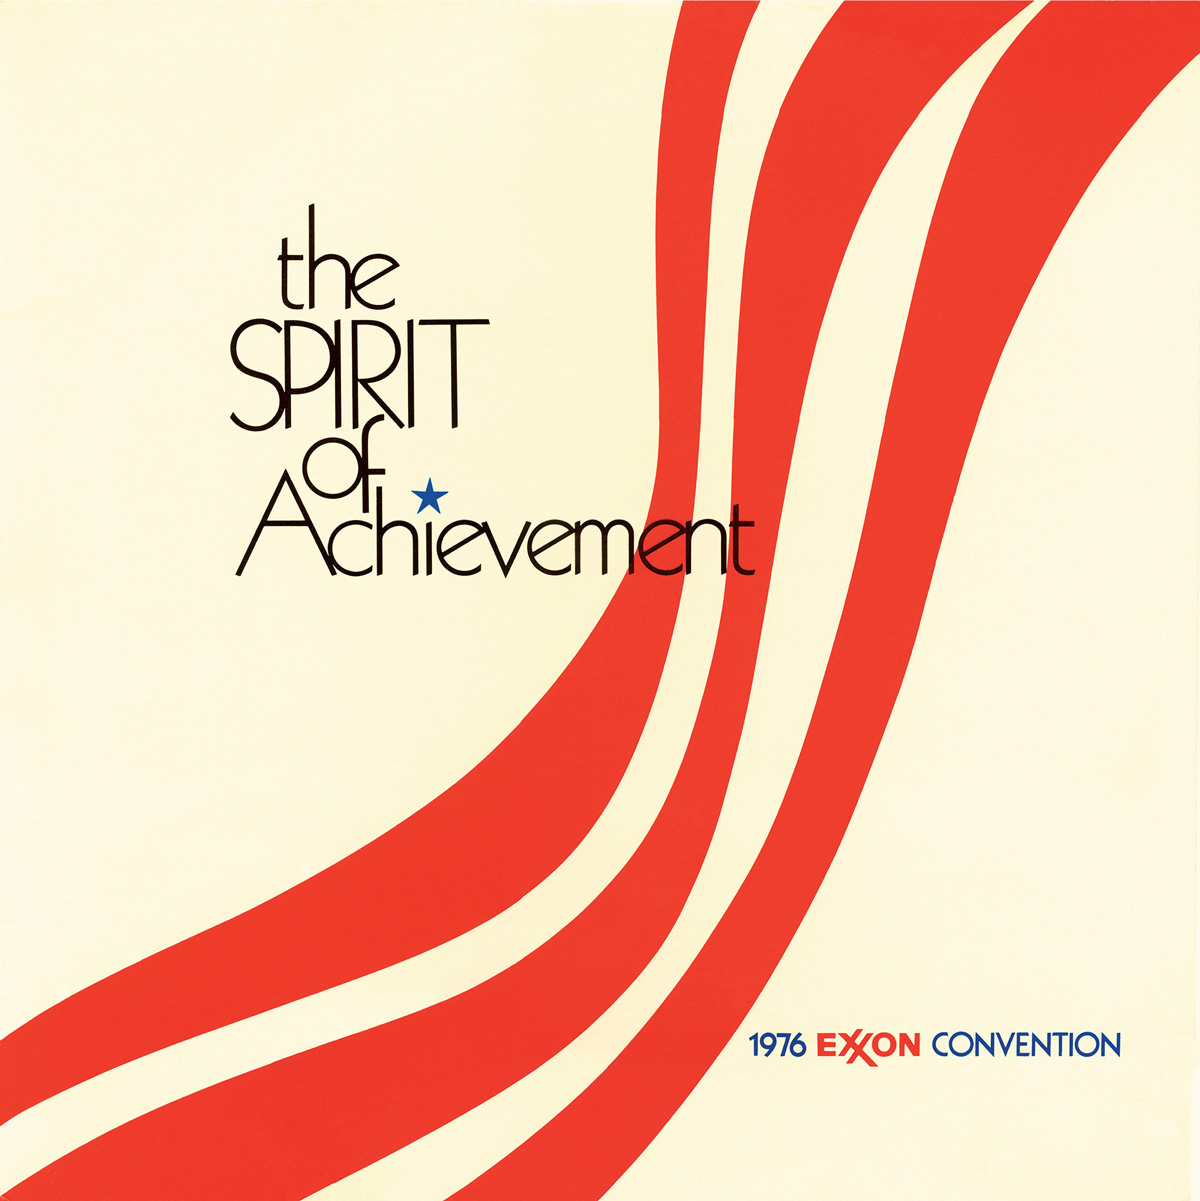 A 1976 album cover for a Exxon show, titled “The Spirit of Achievement.”